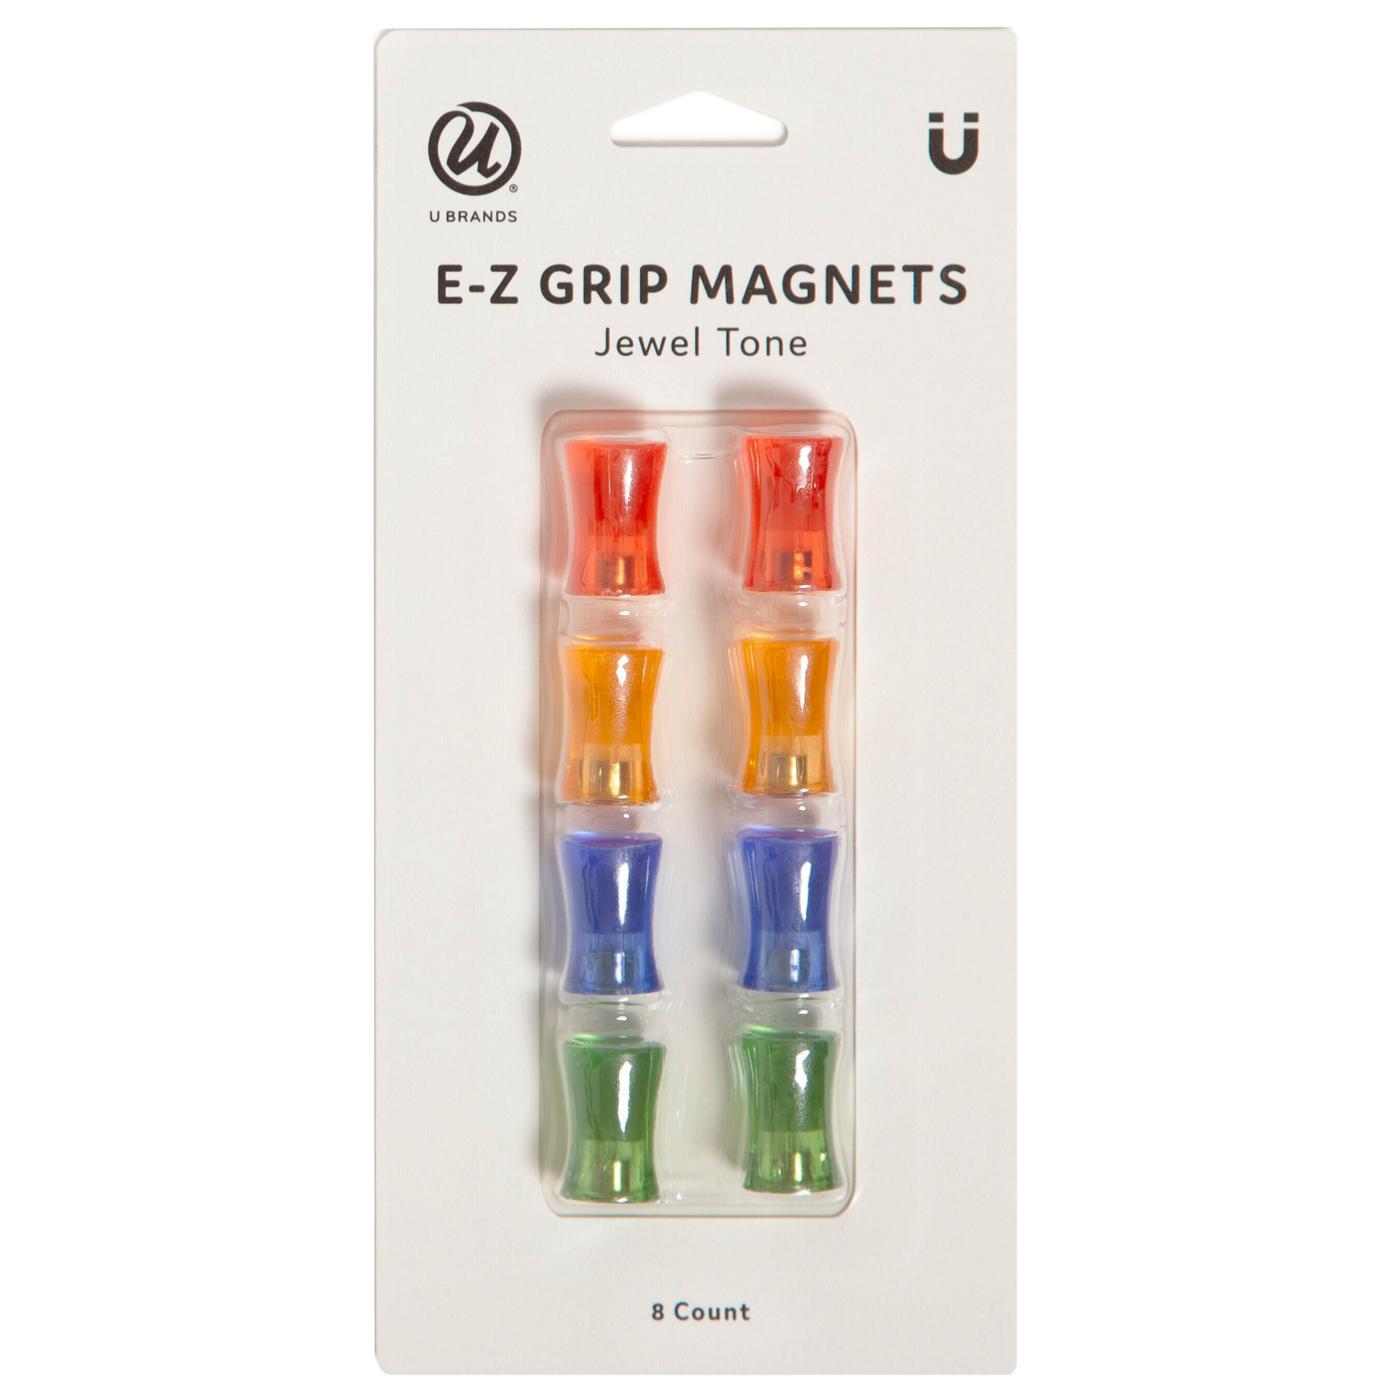 U Brands Jewel Tone E-Z Grip Magnets; image 1 of 2